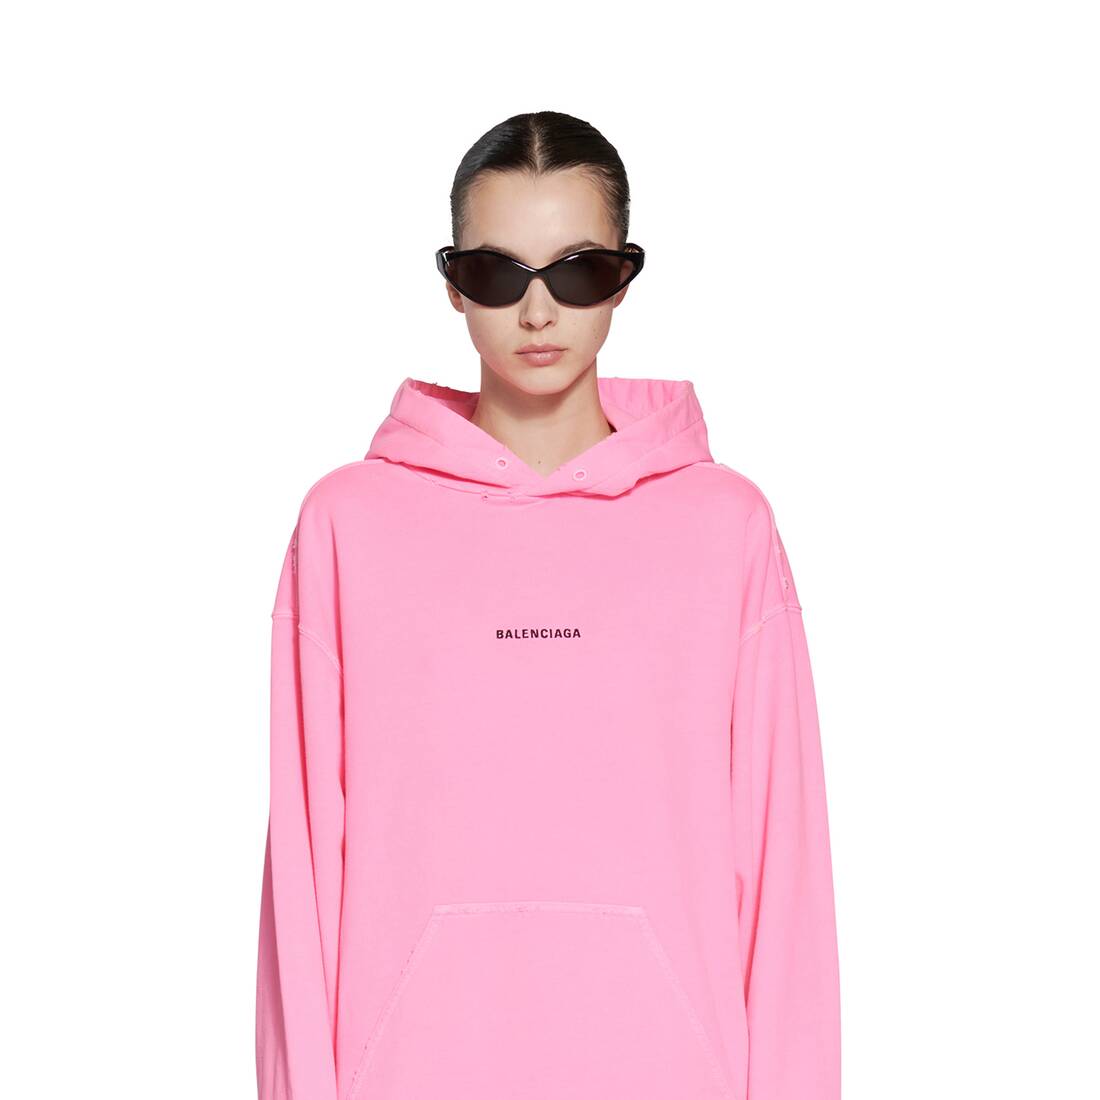 Balenciaga  Branded Hoodie Pink  Babyshopcom